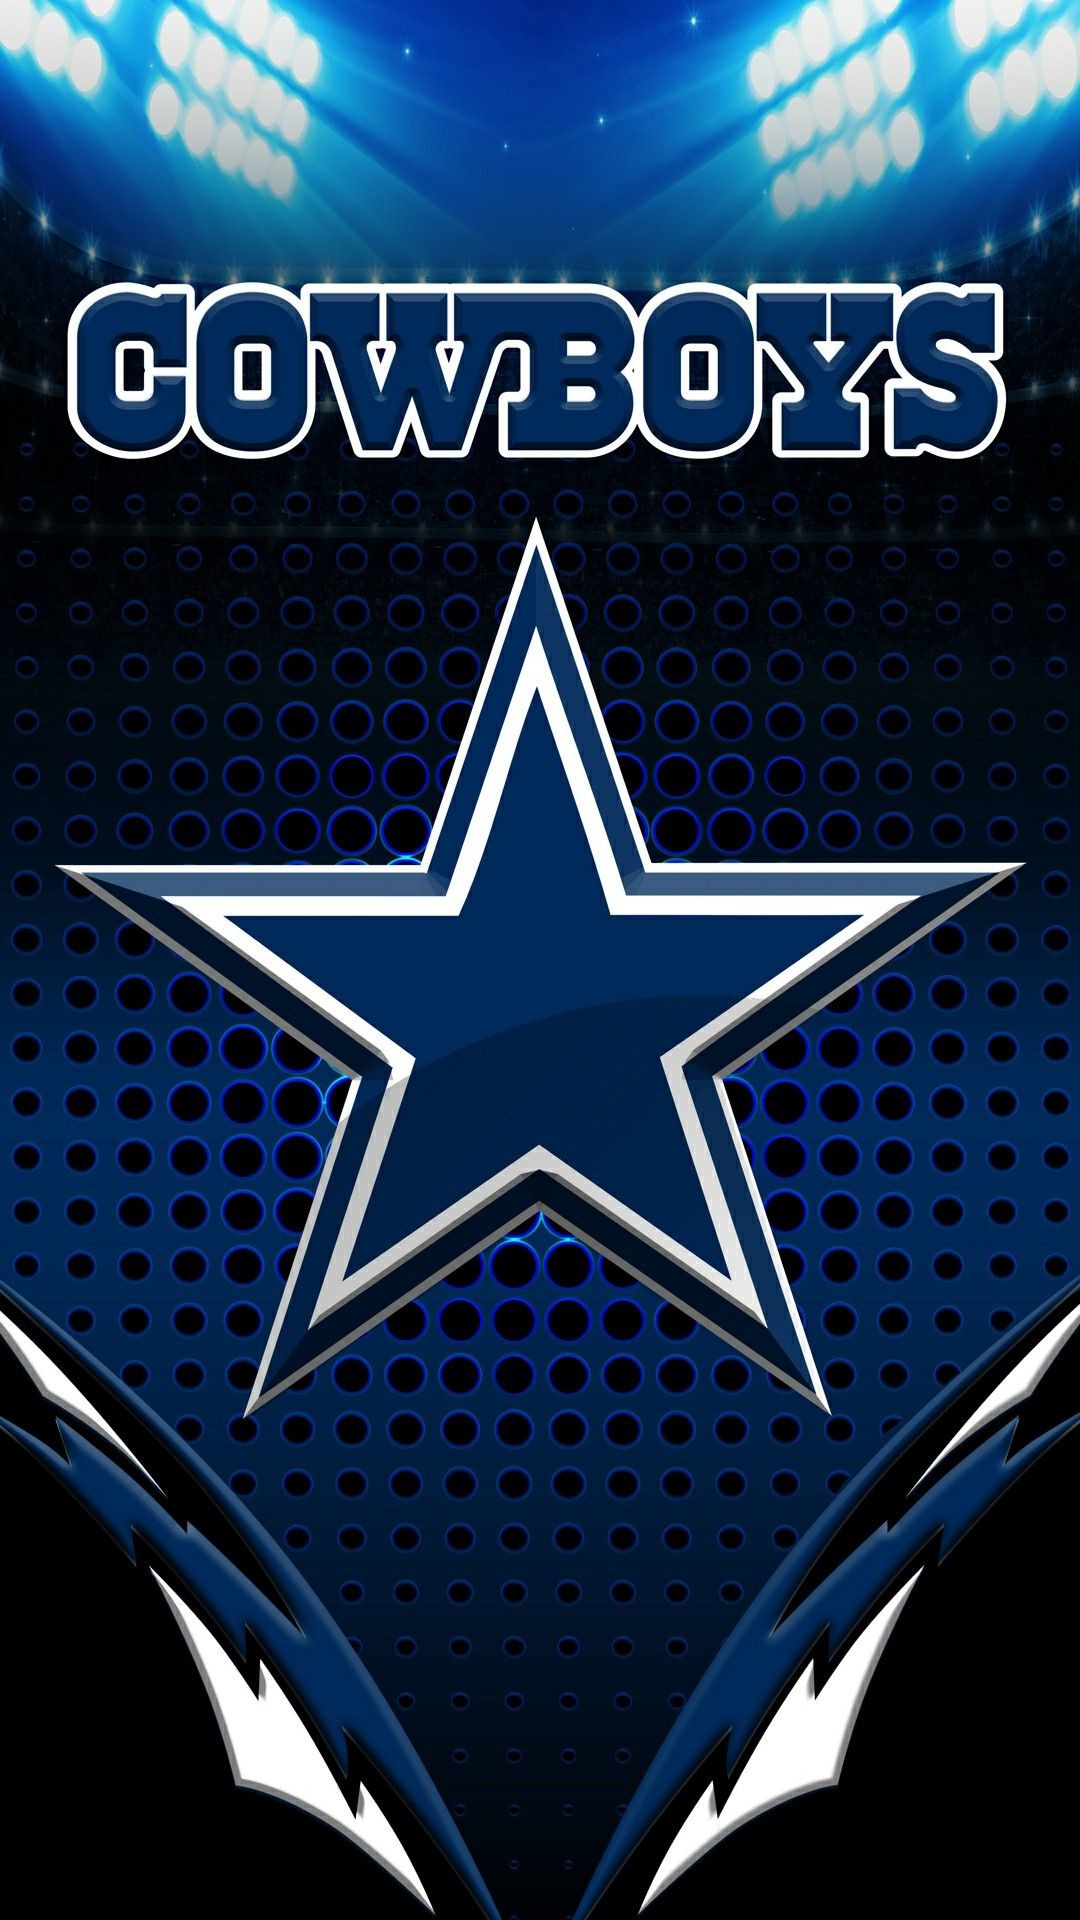 1080x1920 Go cowboys. Go cowboys Dallas Cowboys Wallpaper ...